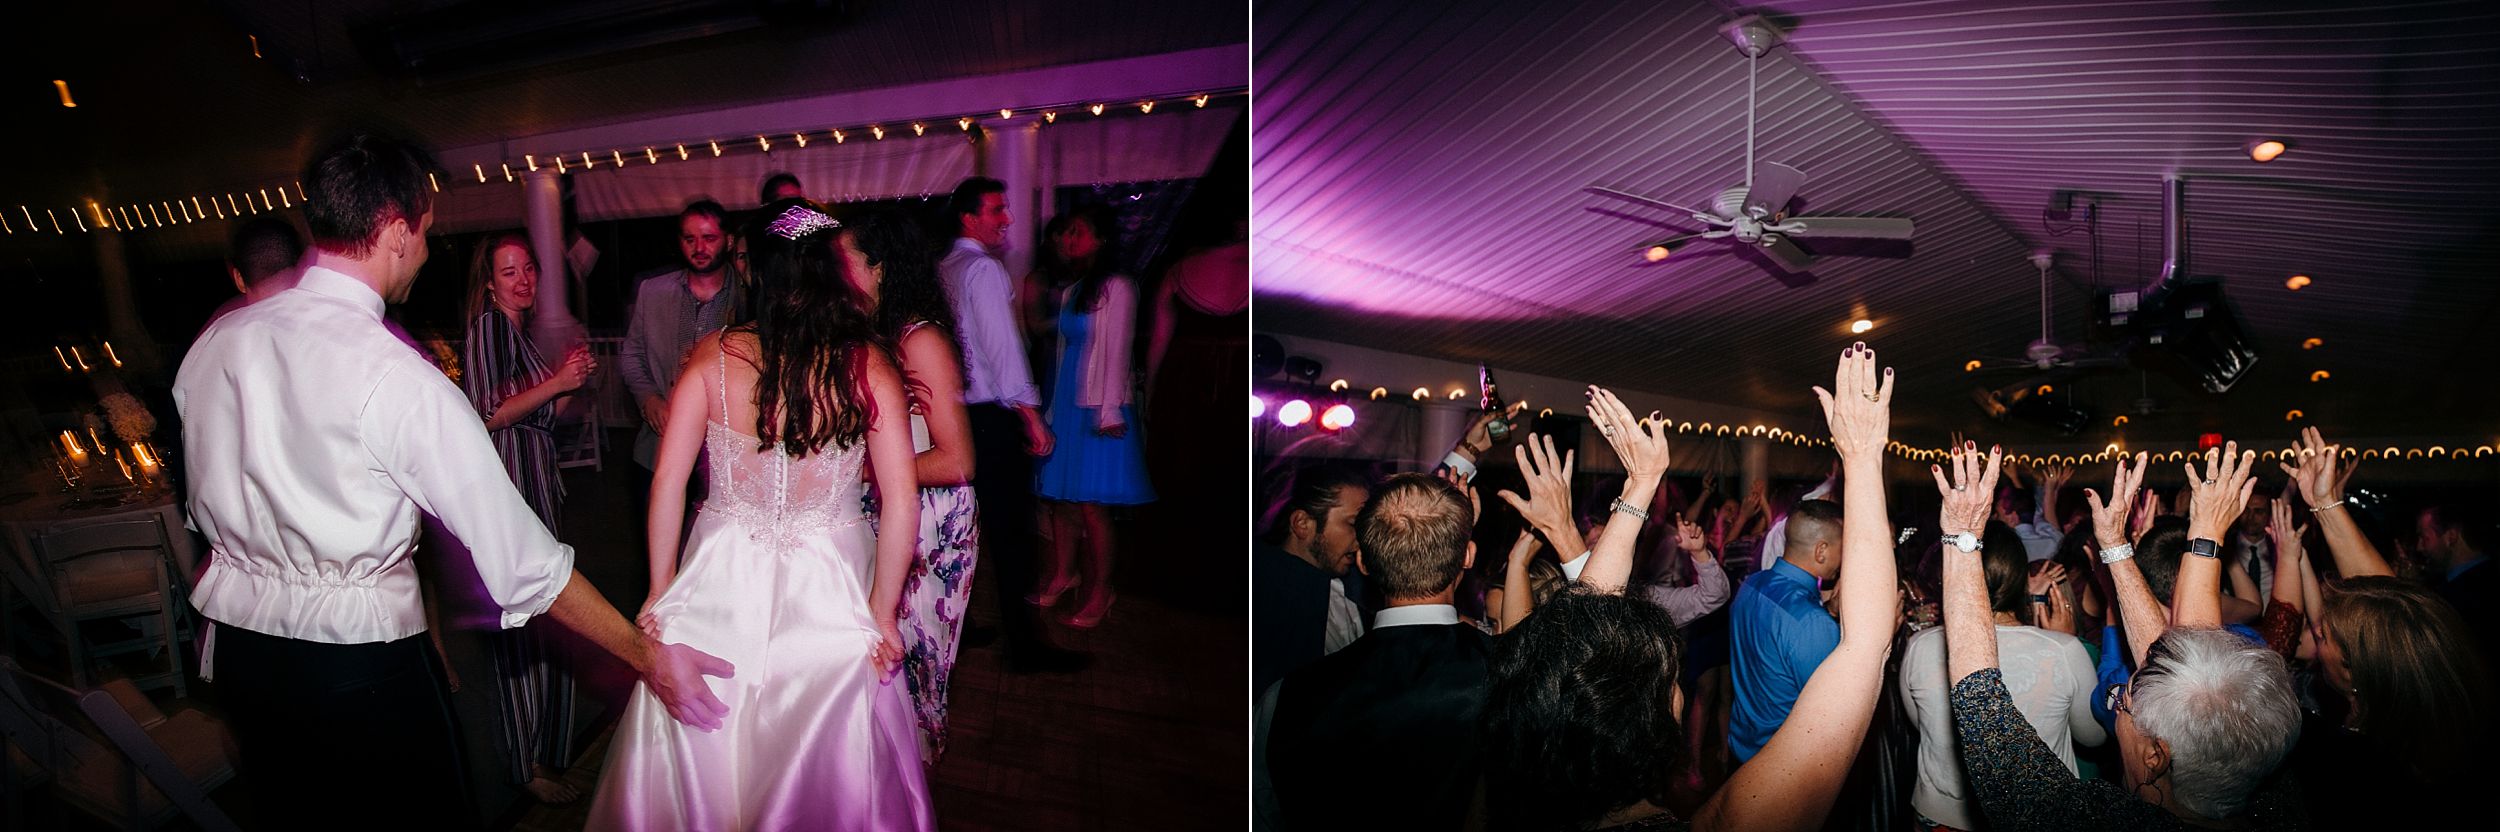 Crazy Wedding Dance Floor Photographs